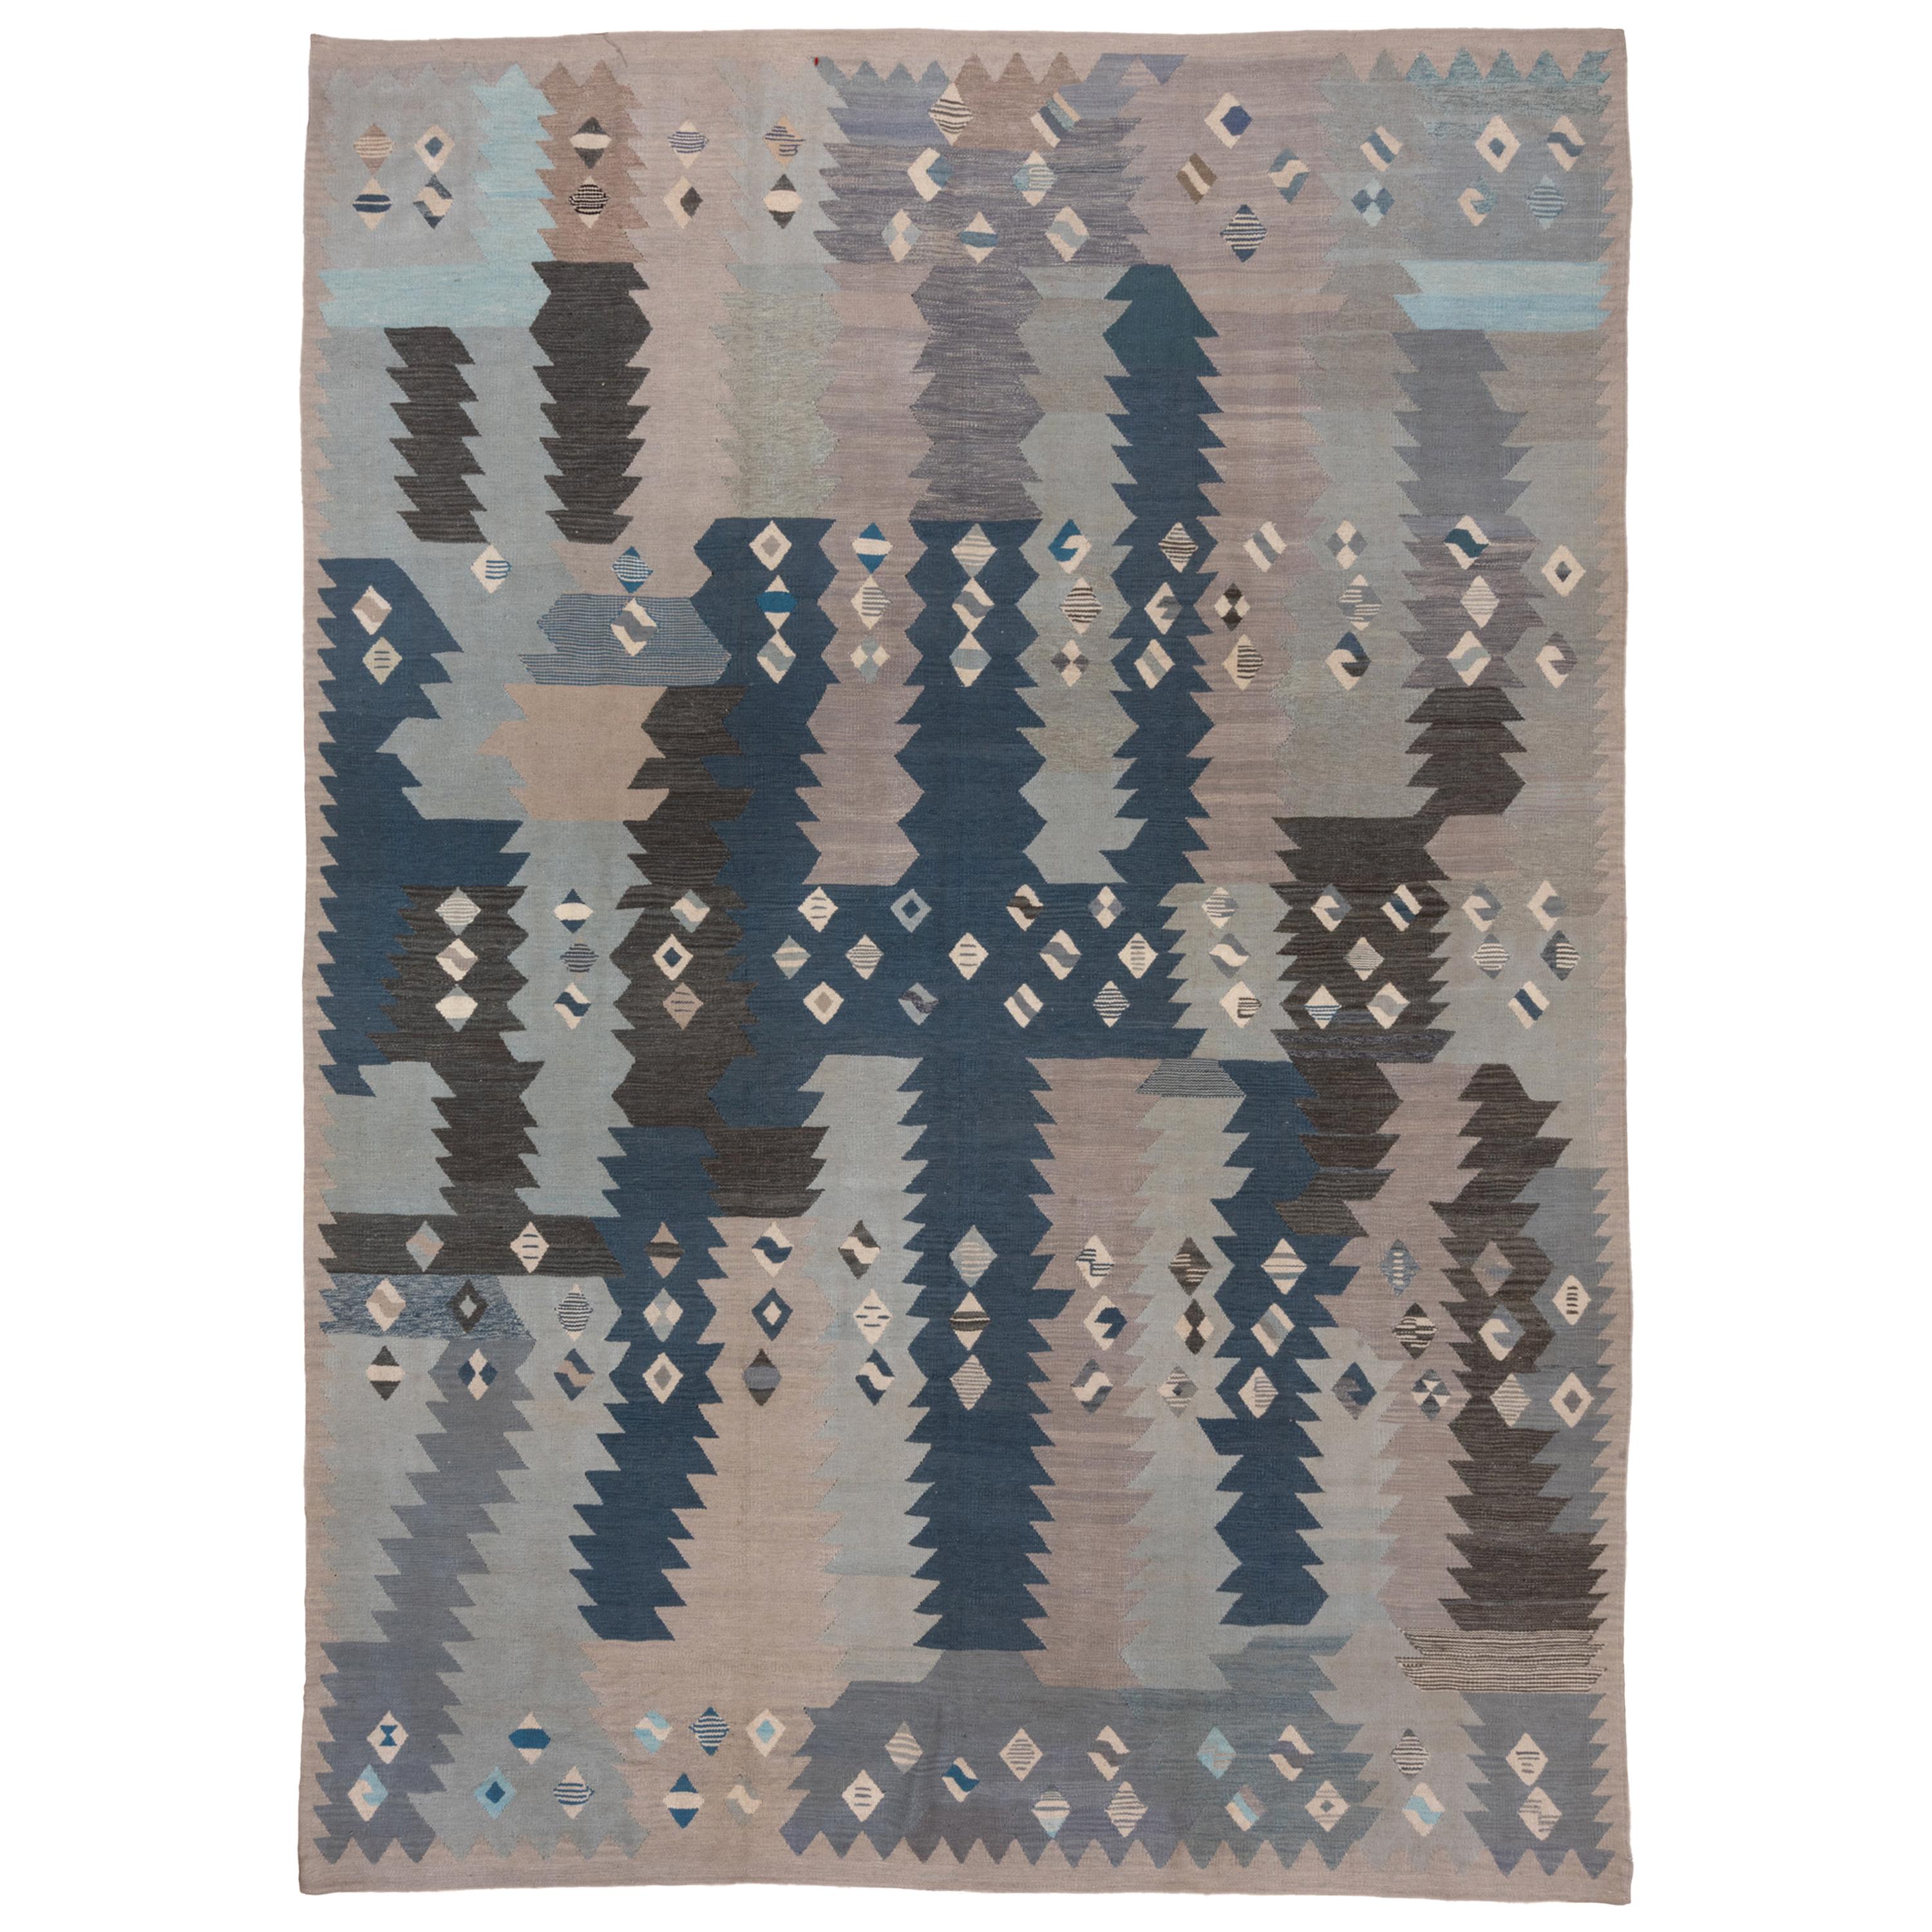 Abstract Blue & Gray Scandinavian Design Rug